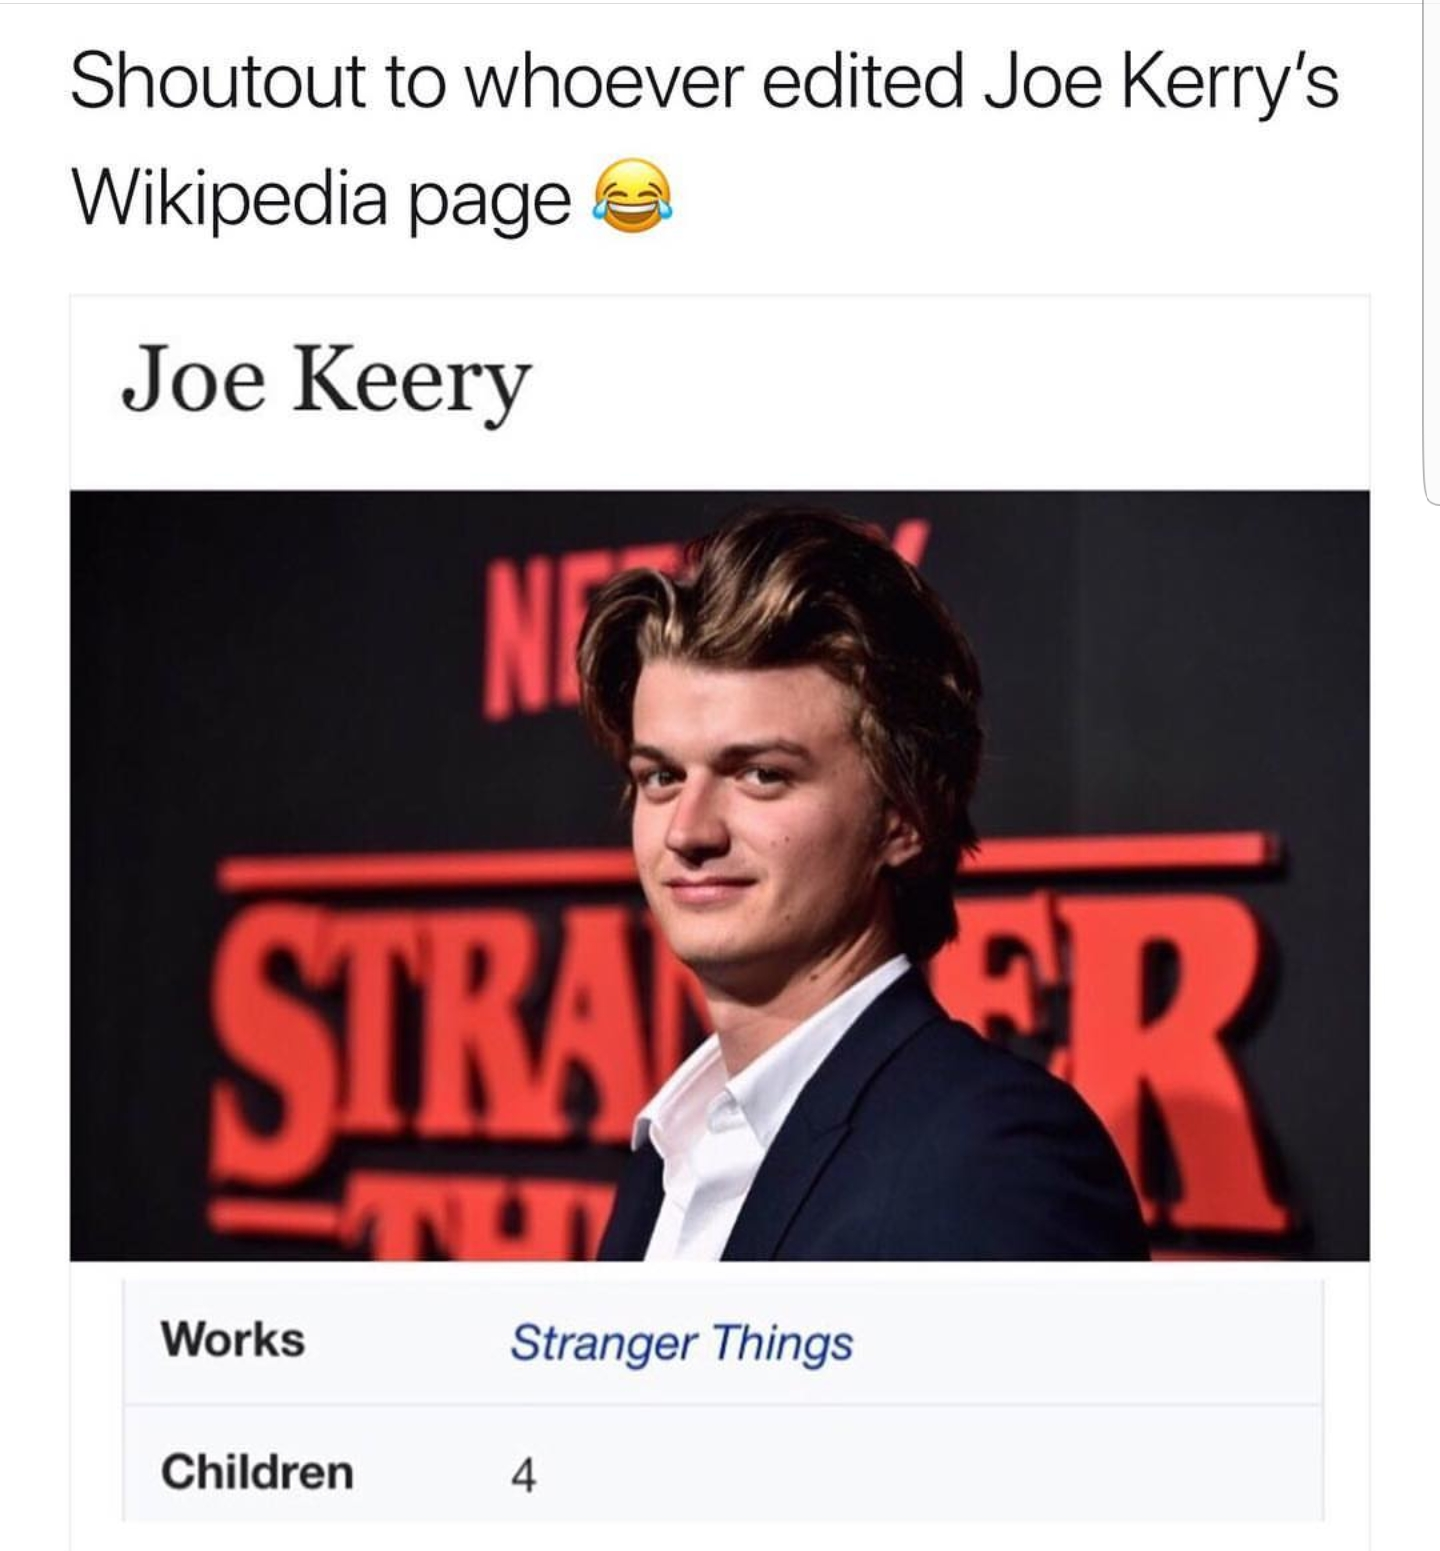 joe keery stranger things steve - Shoutout to whoever edited Joe Kerry's Wikipedia page Joe Keery Stra Works Stranger Things Children 4